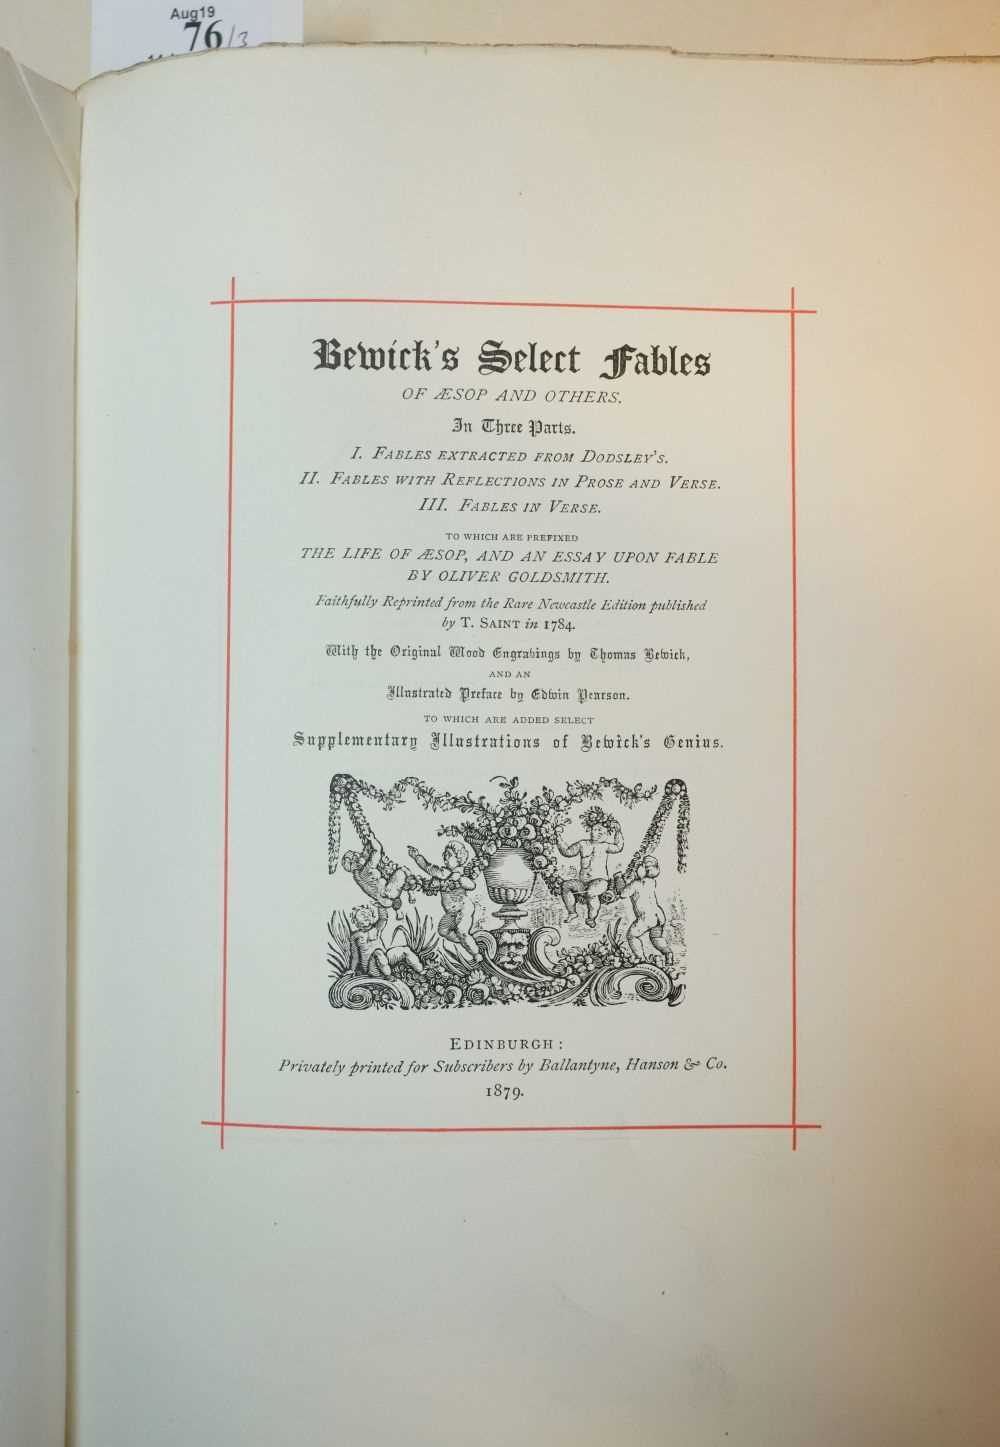 Lot 76 - Bewick (Thomas). Bewick's Select Fables, Edinburgh, 1879